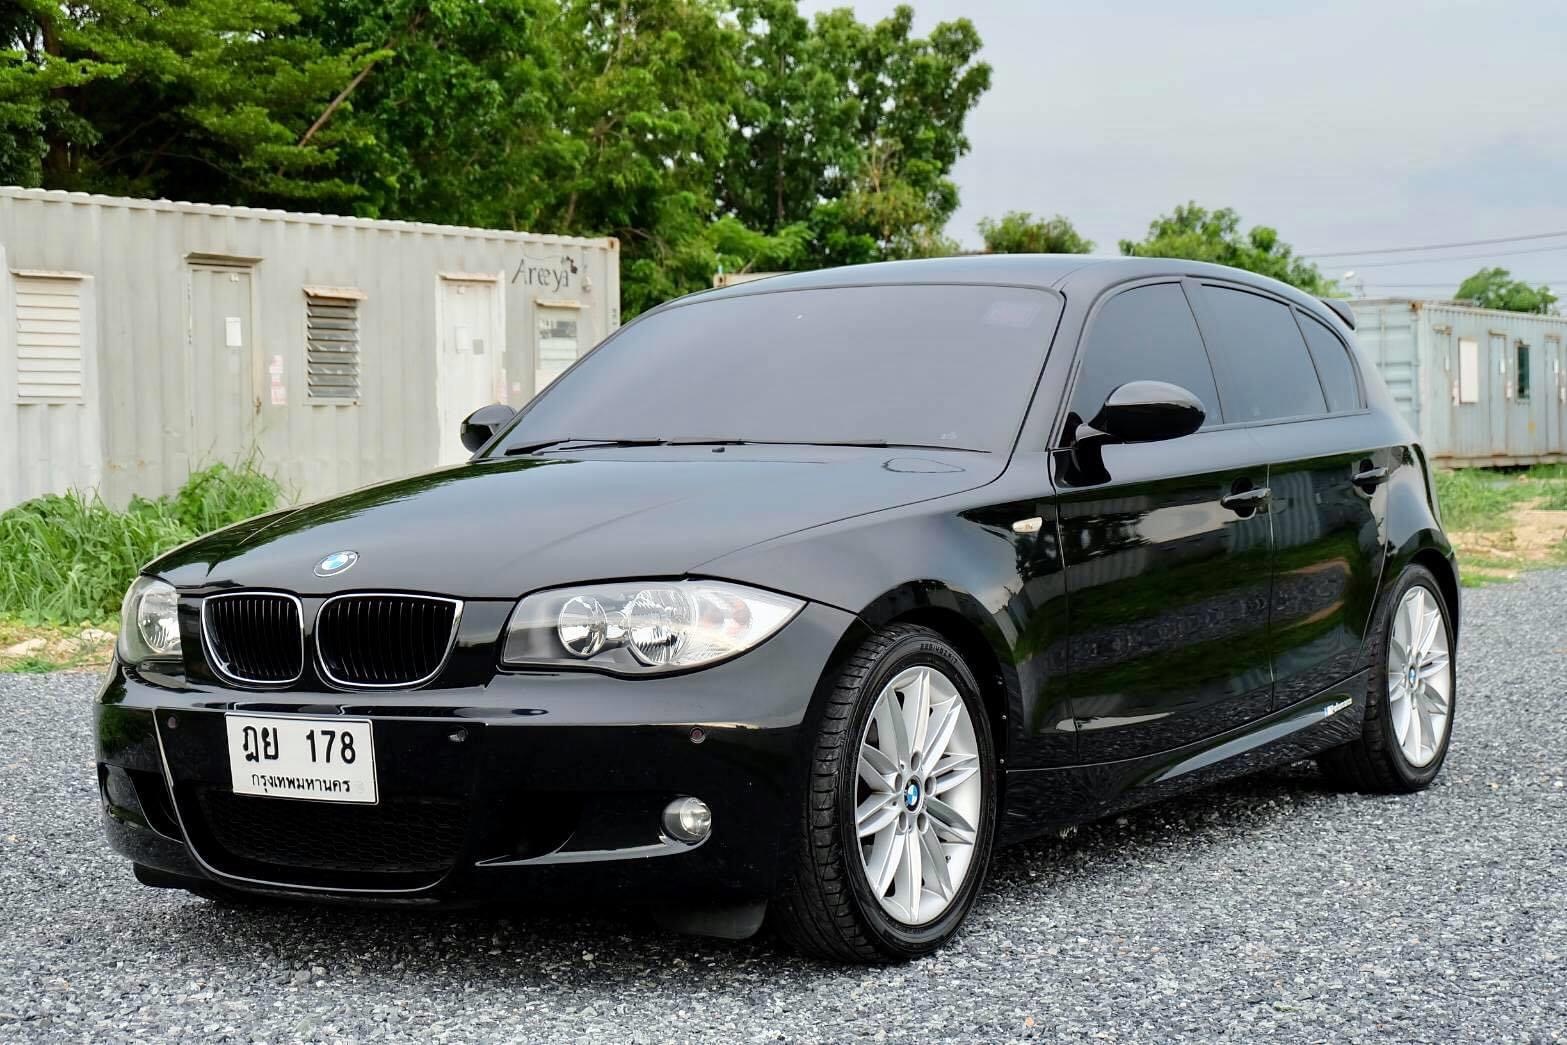 BMW 1 Series E87 / E82 118i (5 ประตู) ปี 2010 สีดำ